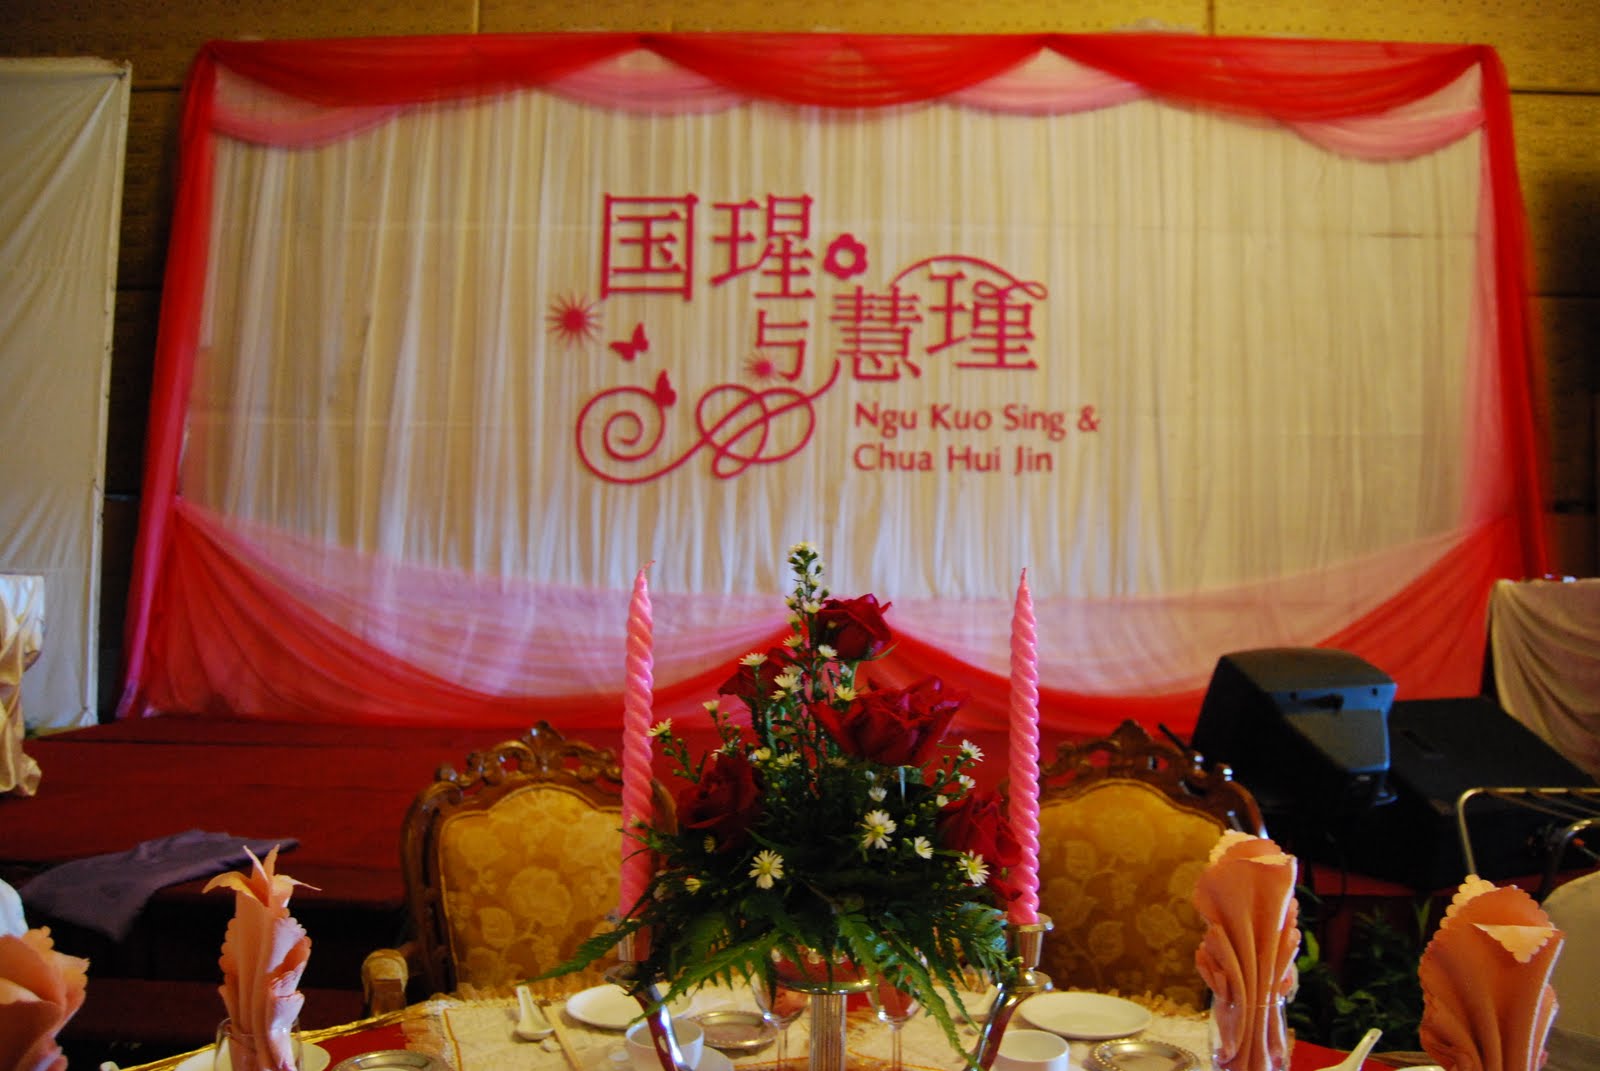 Wedding backdrop for Ngu Kuo